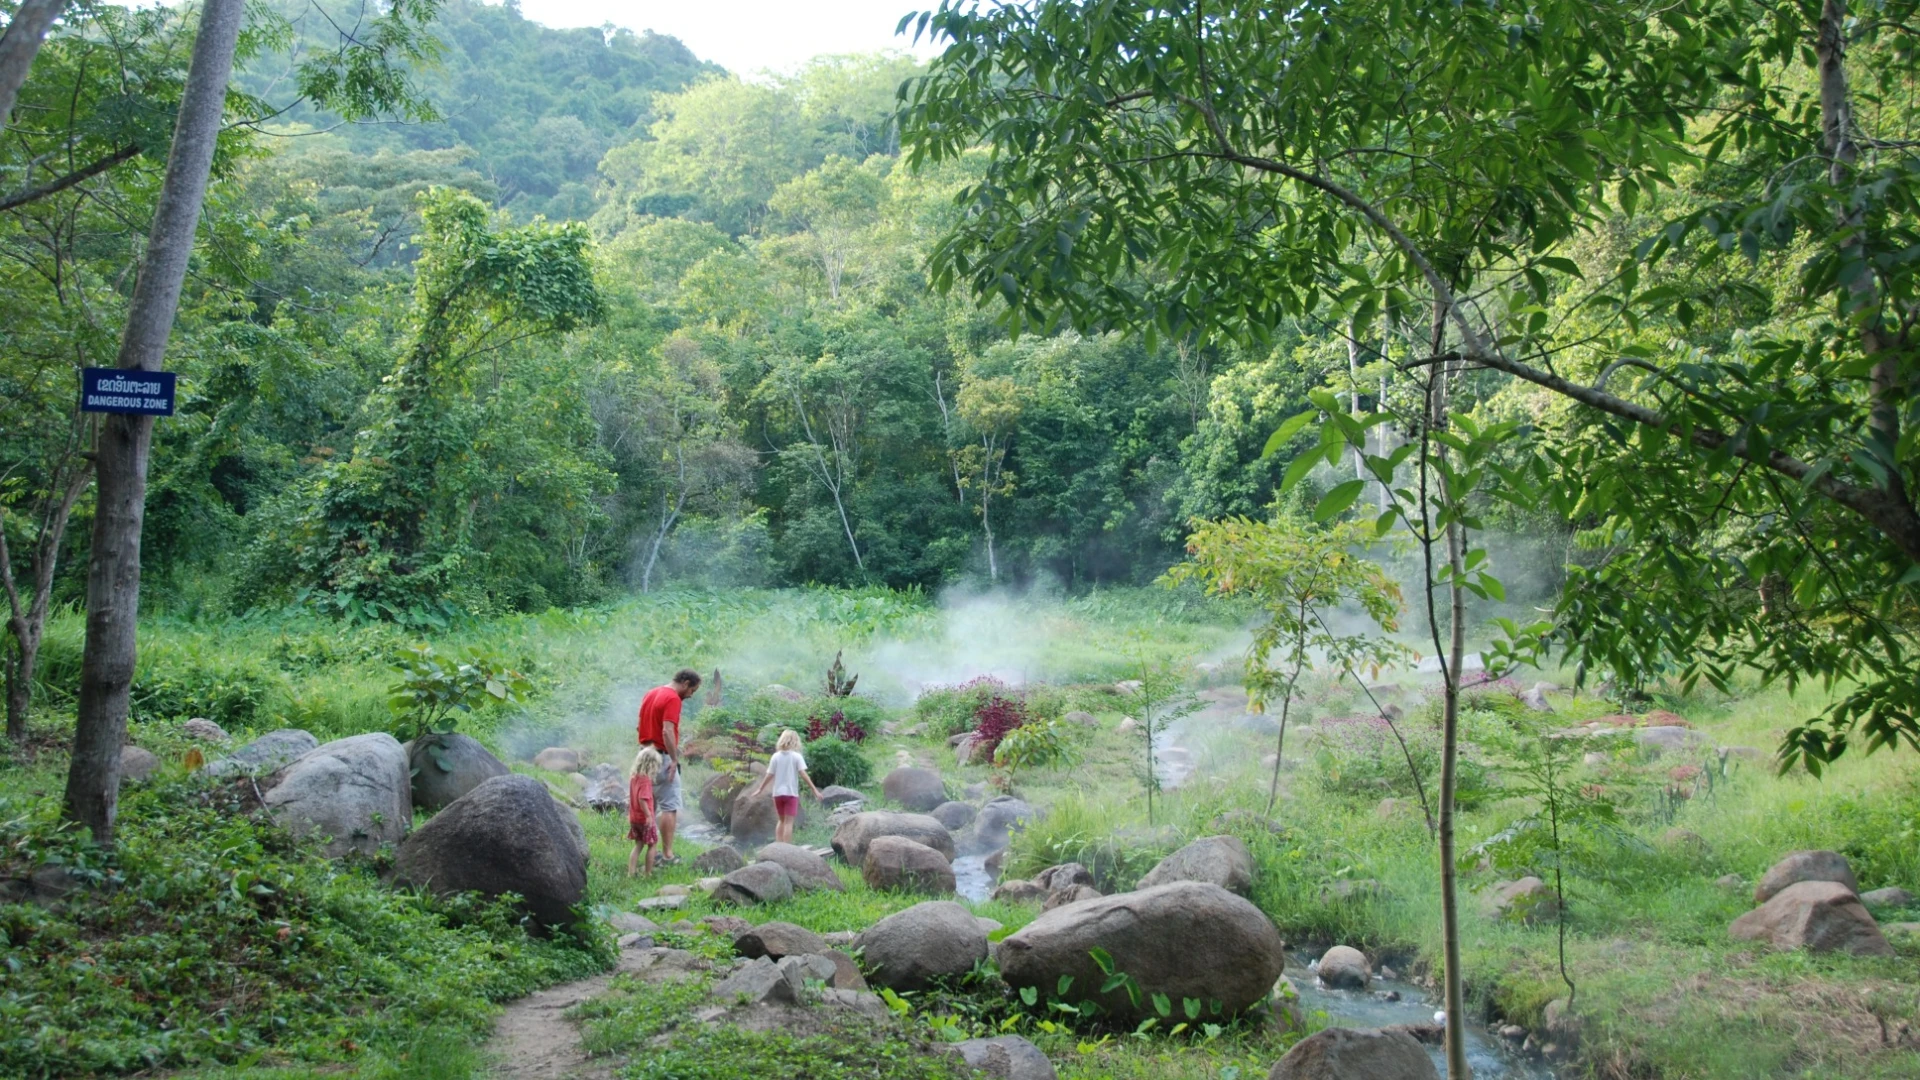 Viengthong/Muang Hiam Hot Springs